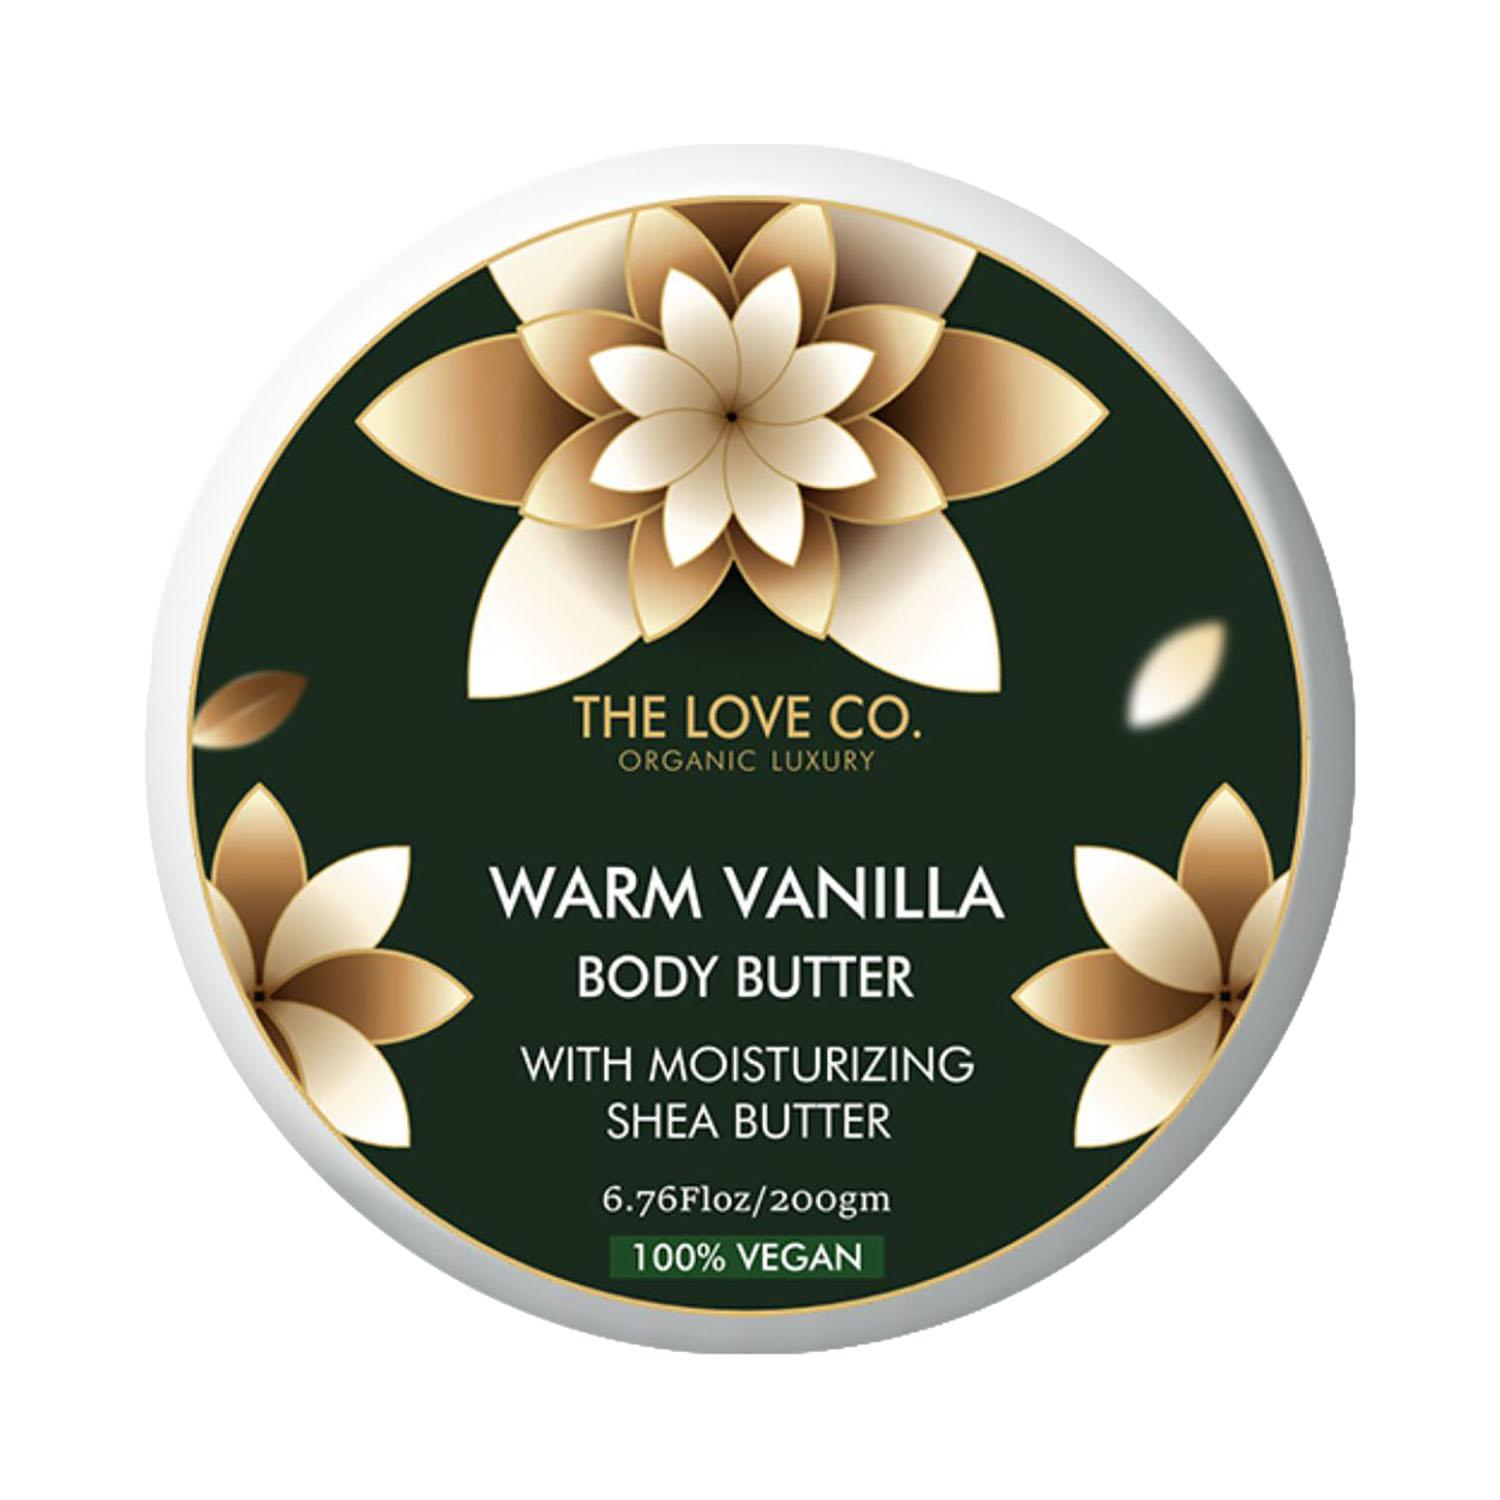 THE LOVE CO. | THE LOVE CO. Warm Vanilla Body Butter Deep Moisturization With Pure Shea Butter (200g)